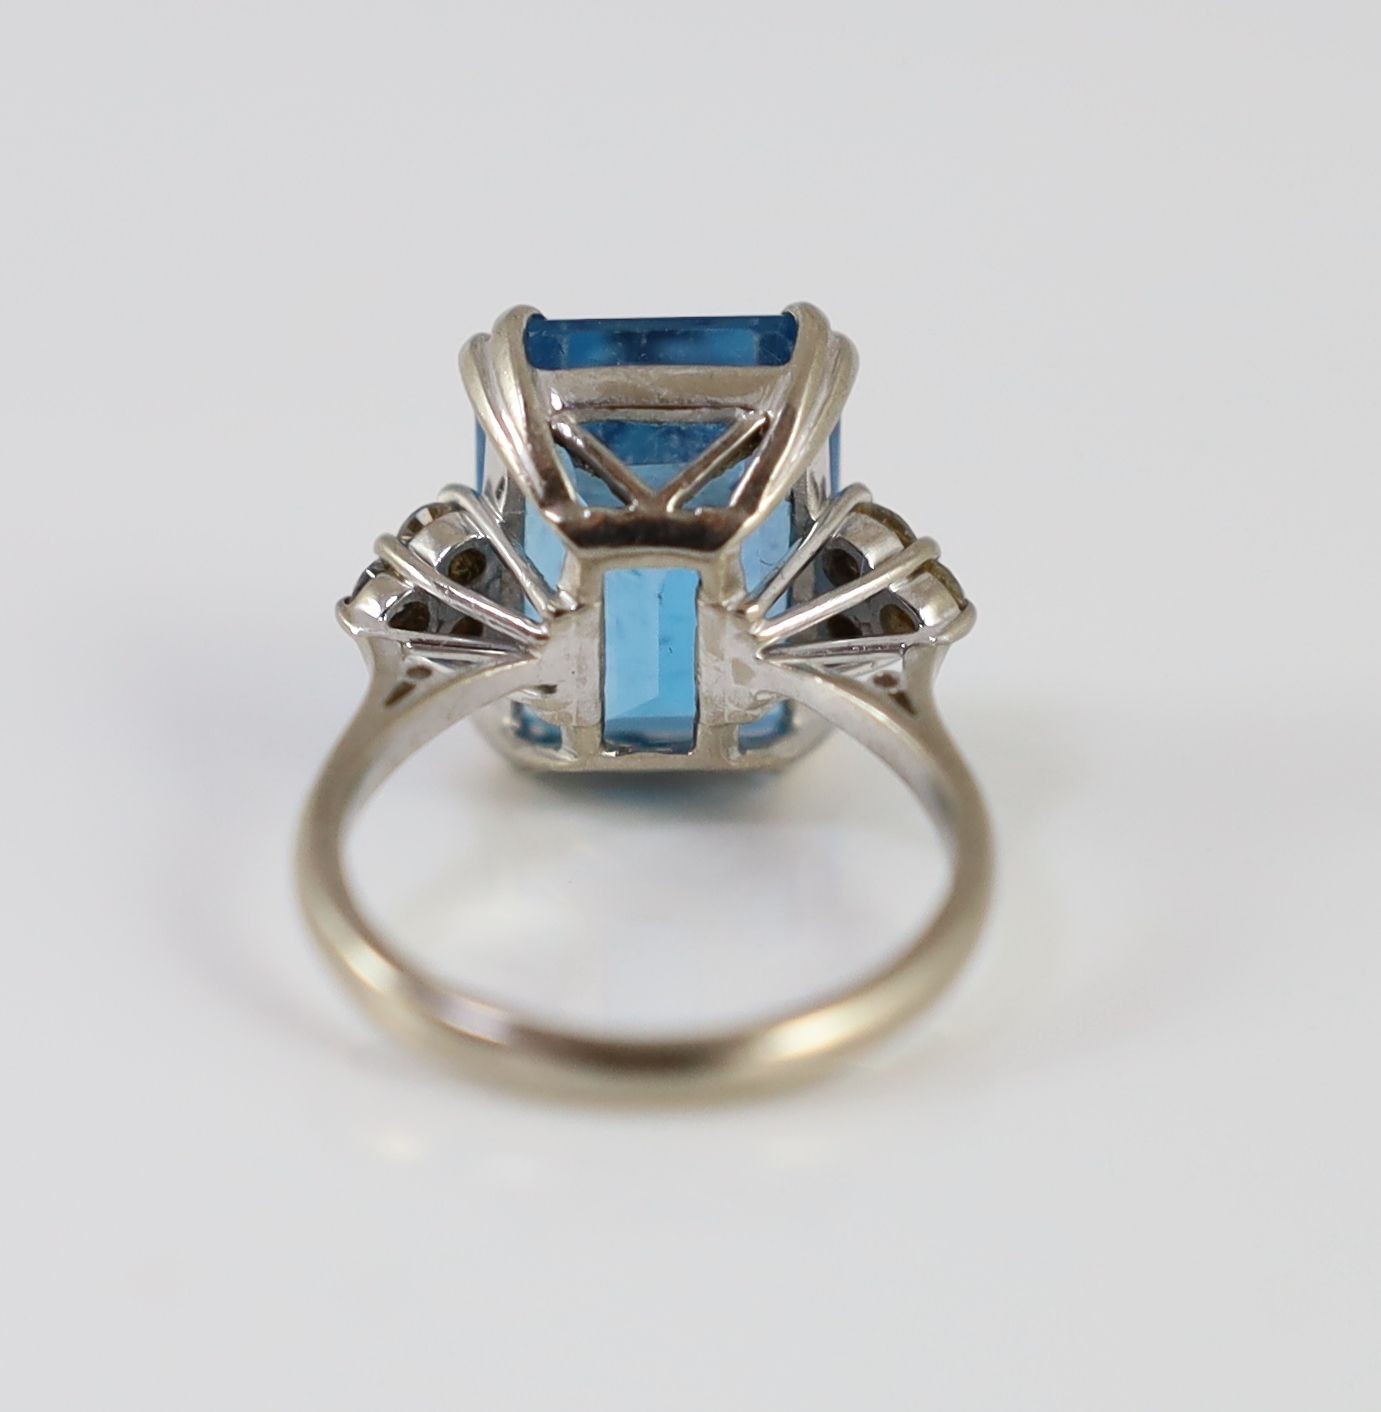 A modern 18ct white gold and emerald cut blue topaz set dress ring